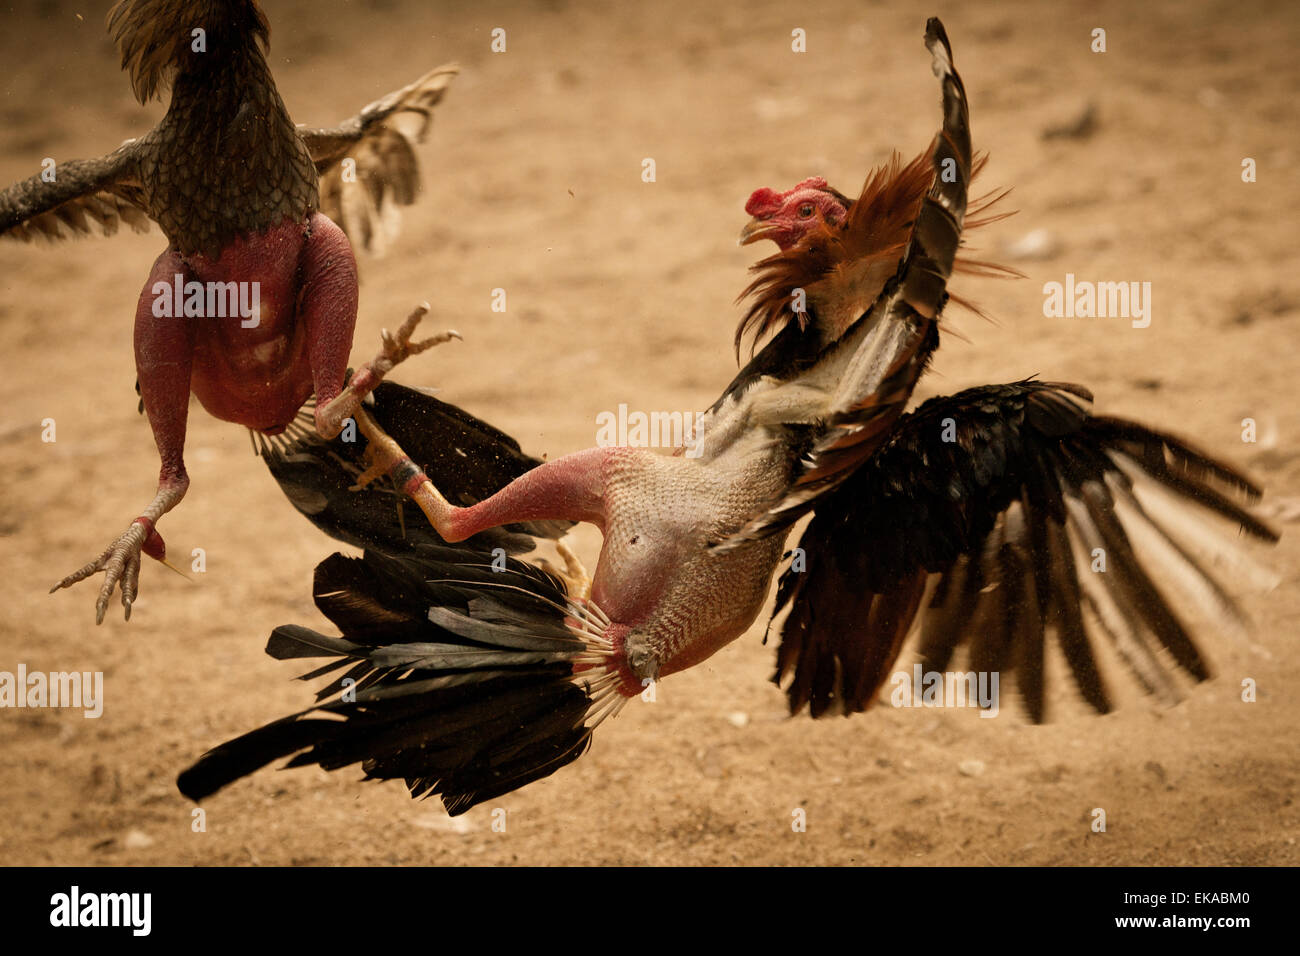 Kämpfenden Kampfhähne bei einem Hahnenkampf Stockfoto